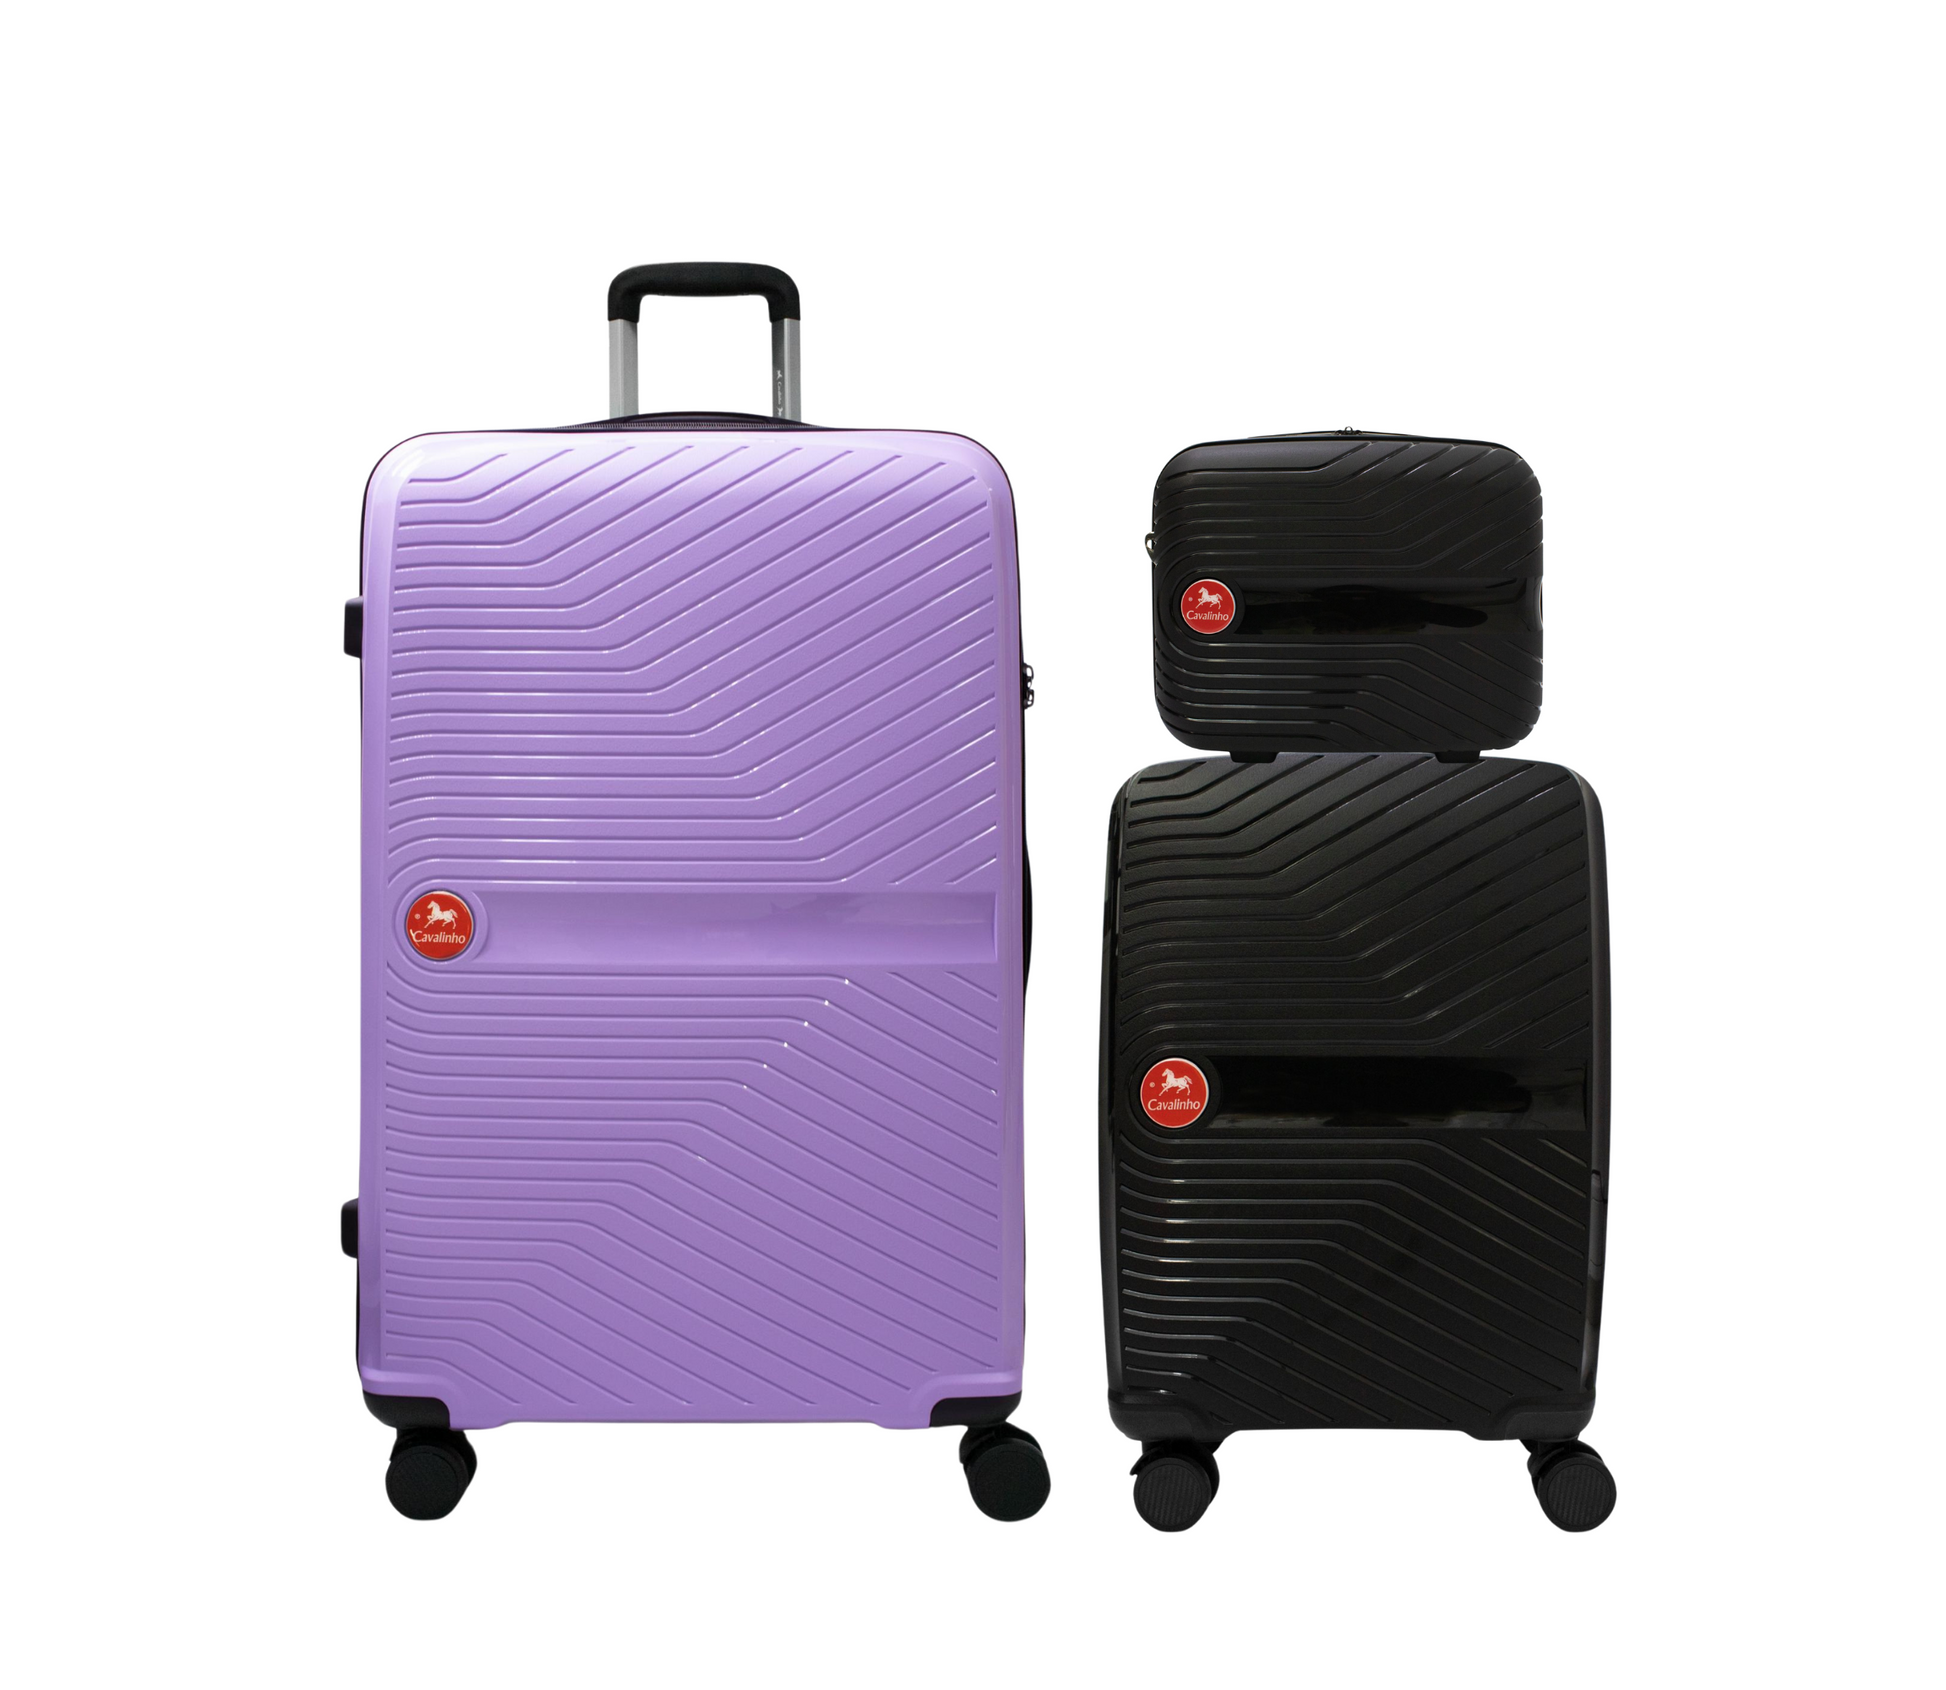 Cavalinho Colorful 3 Piece Luggage Set (15", 19" & 28") - Black Black Lilac - 68020004.010139.S151928._1